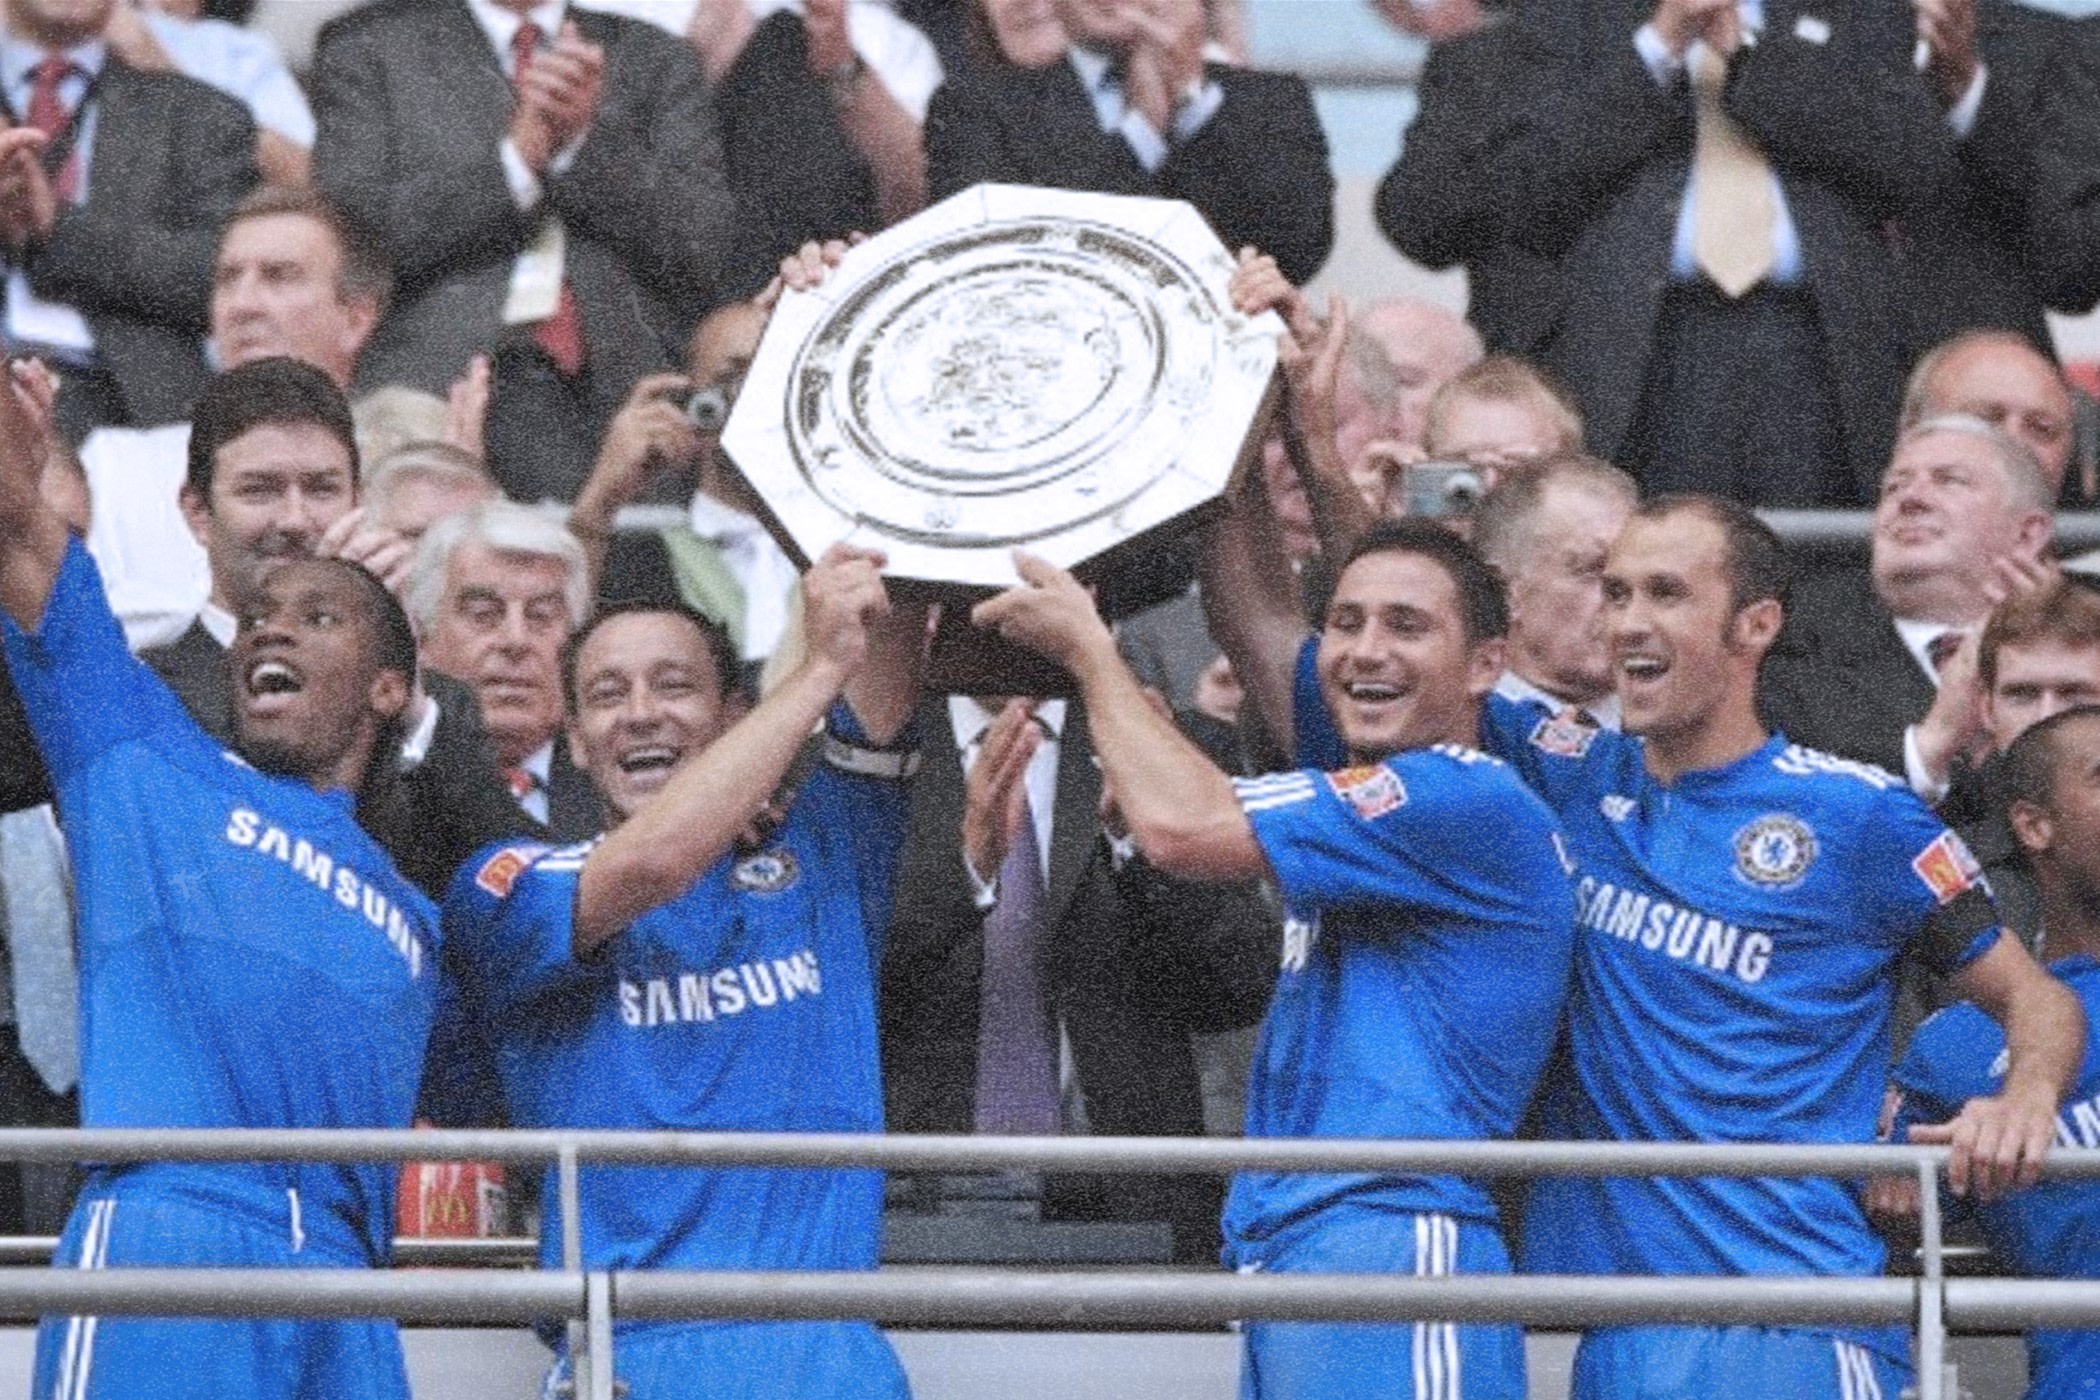 FA community shield - All winners. English supercup winners list by club 